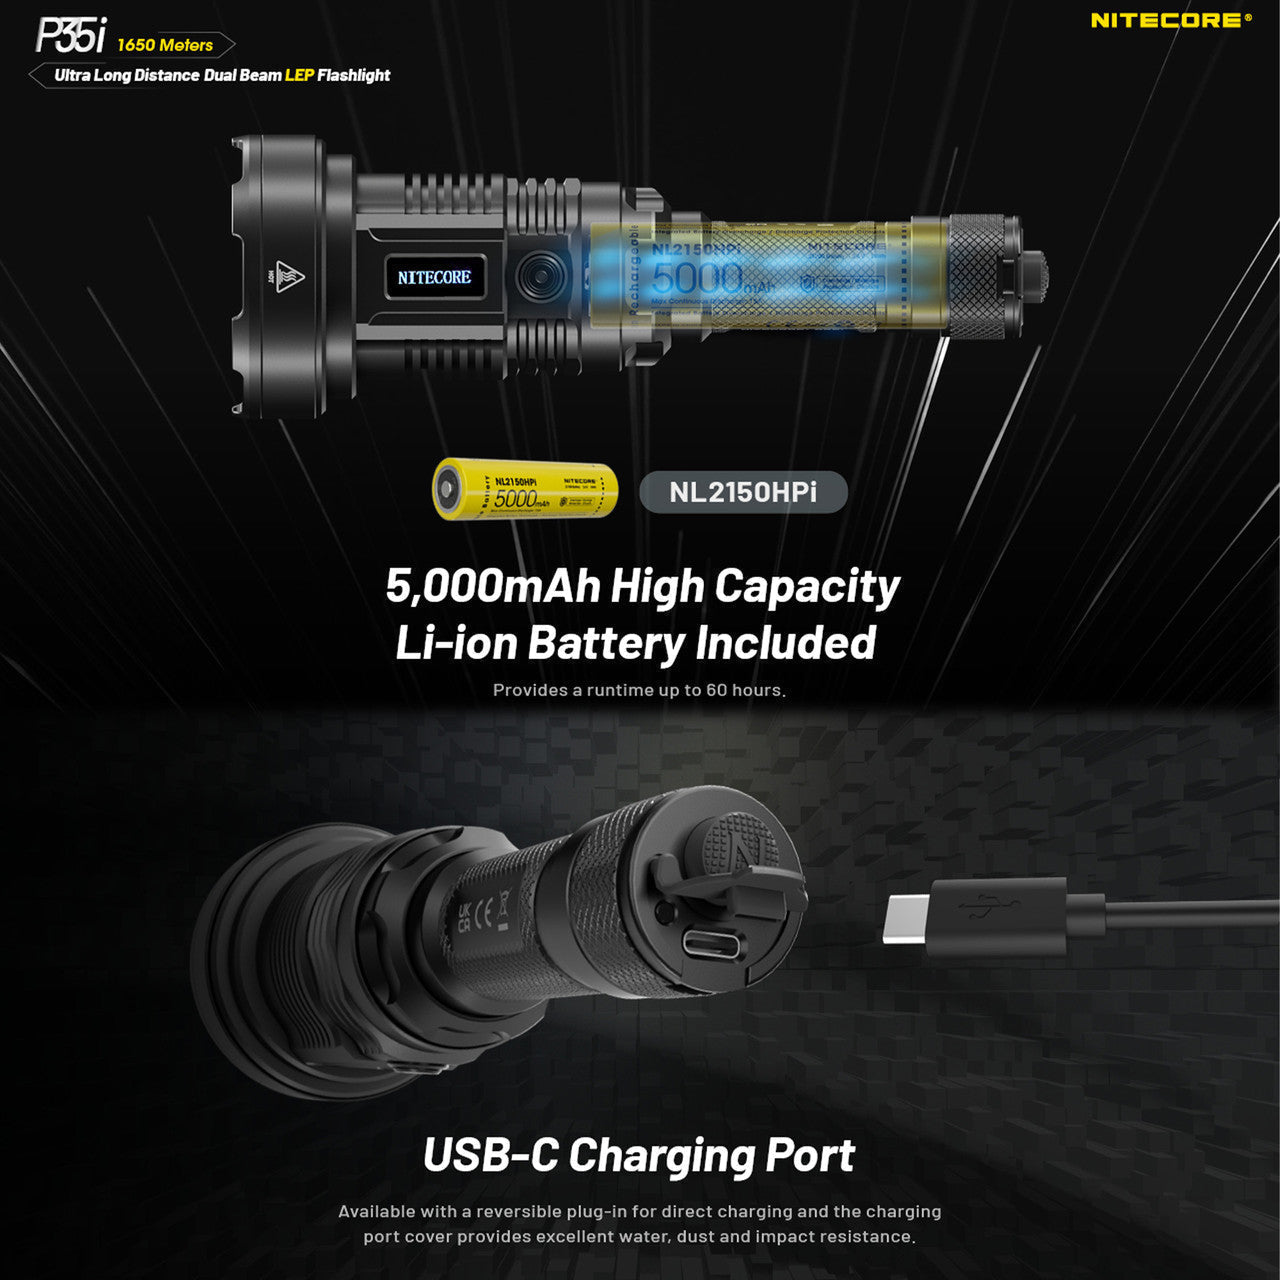 Flashlights & Headlamps - Nitecore P35i Long Throw LEP Flashlight (3000 Lumens | USB-C Rechargeable)